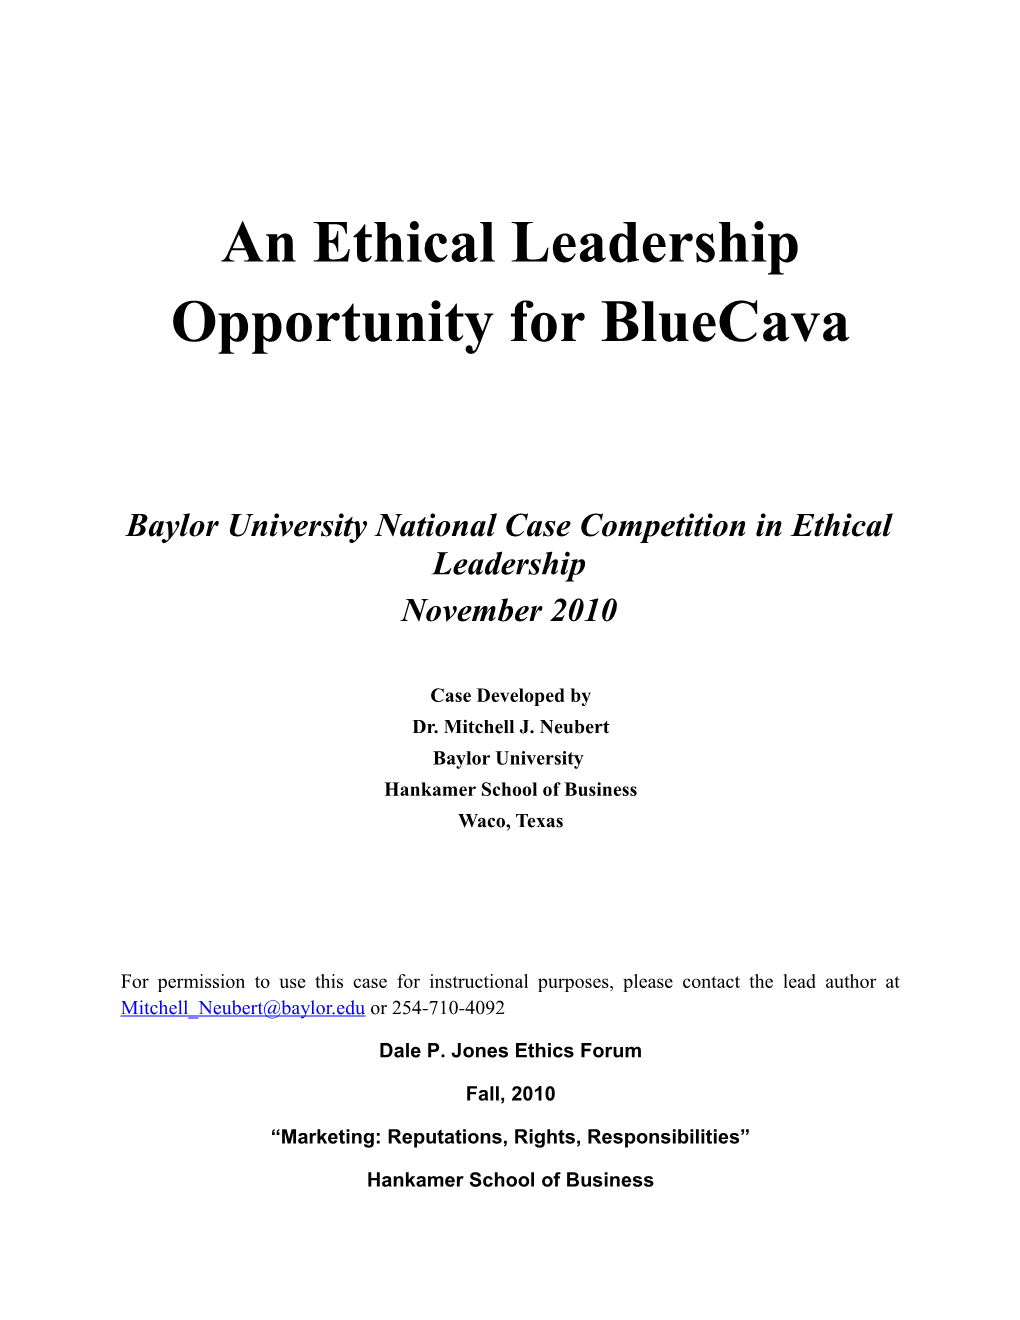 An Ethical Leadership Opportunity for Bluecava